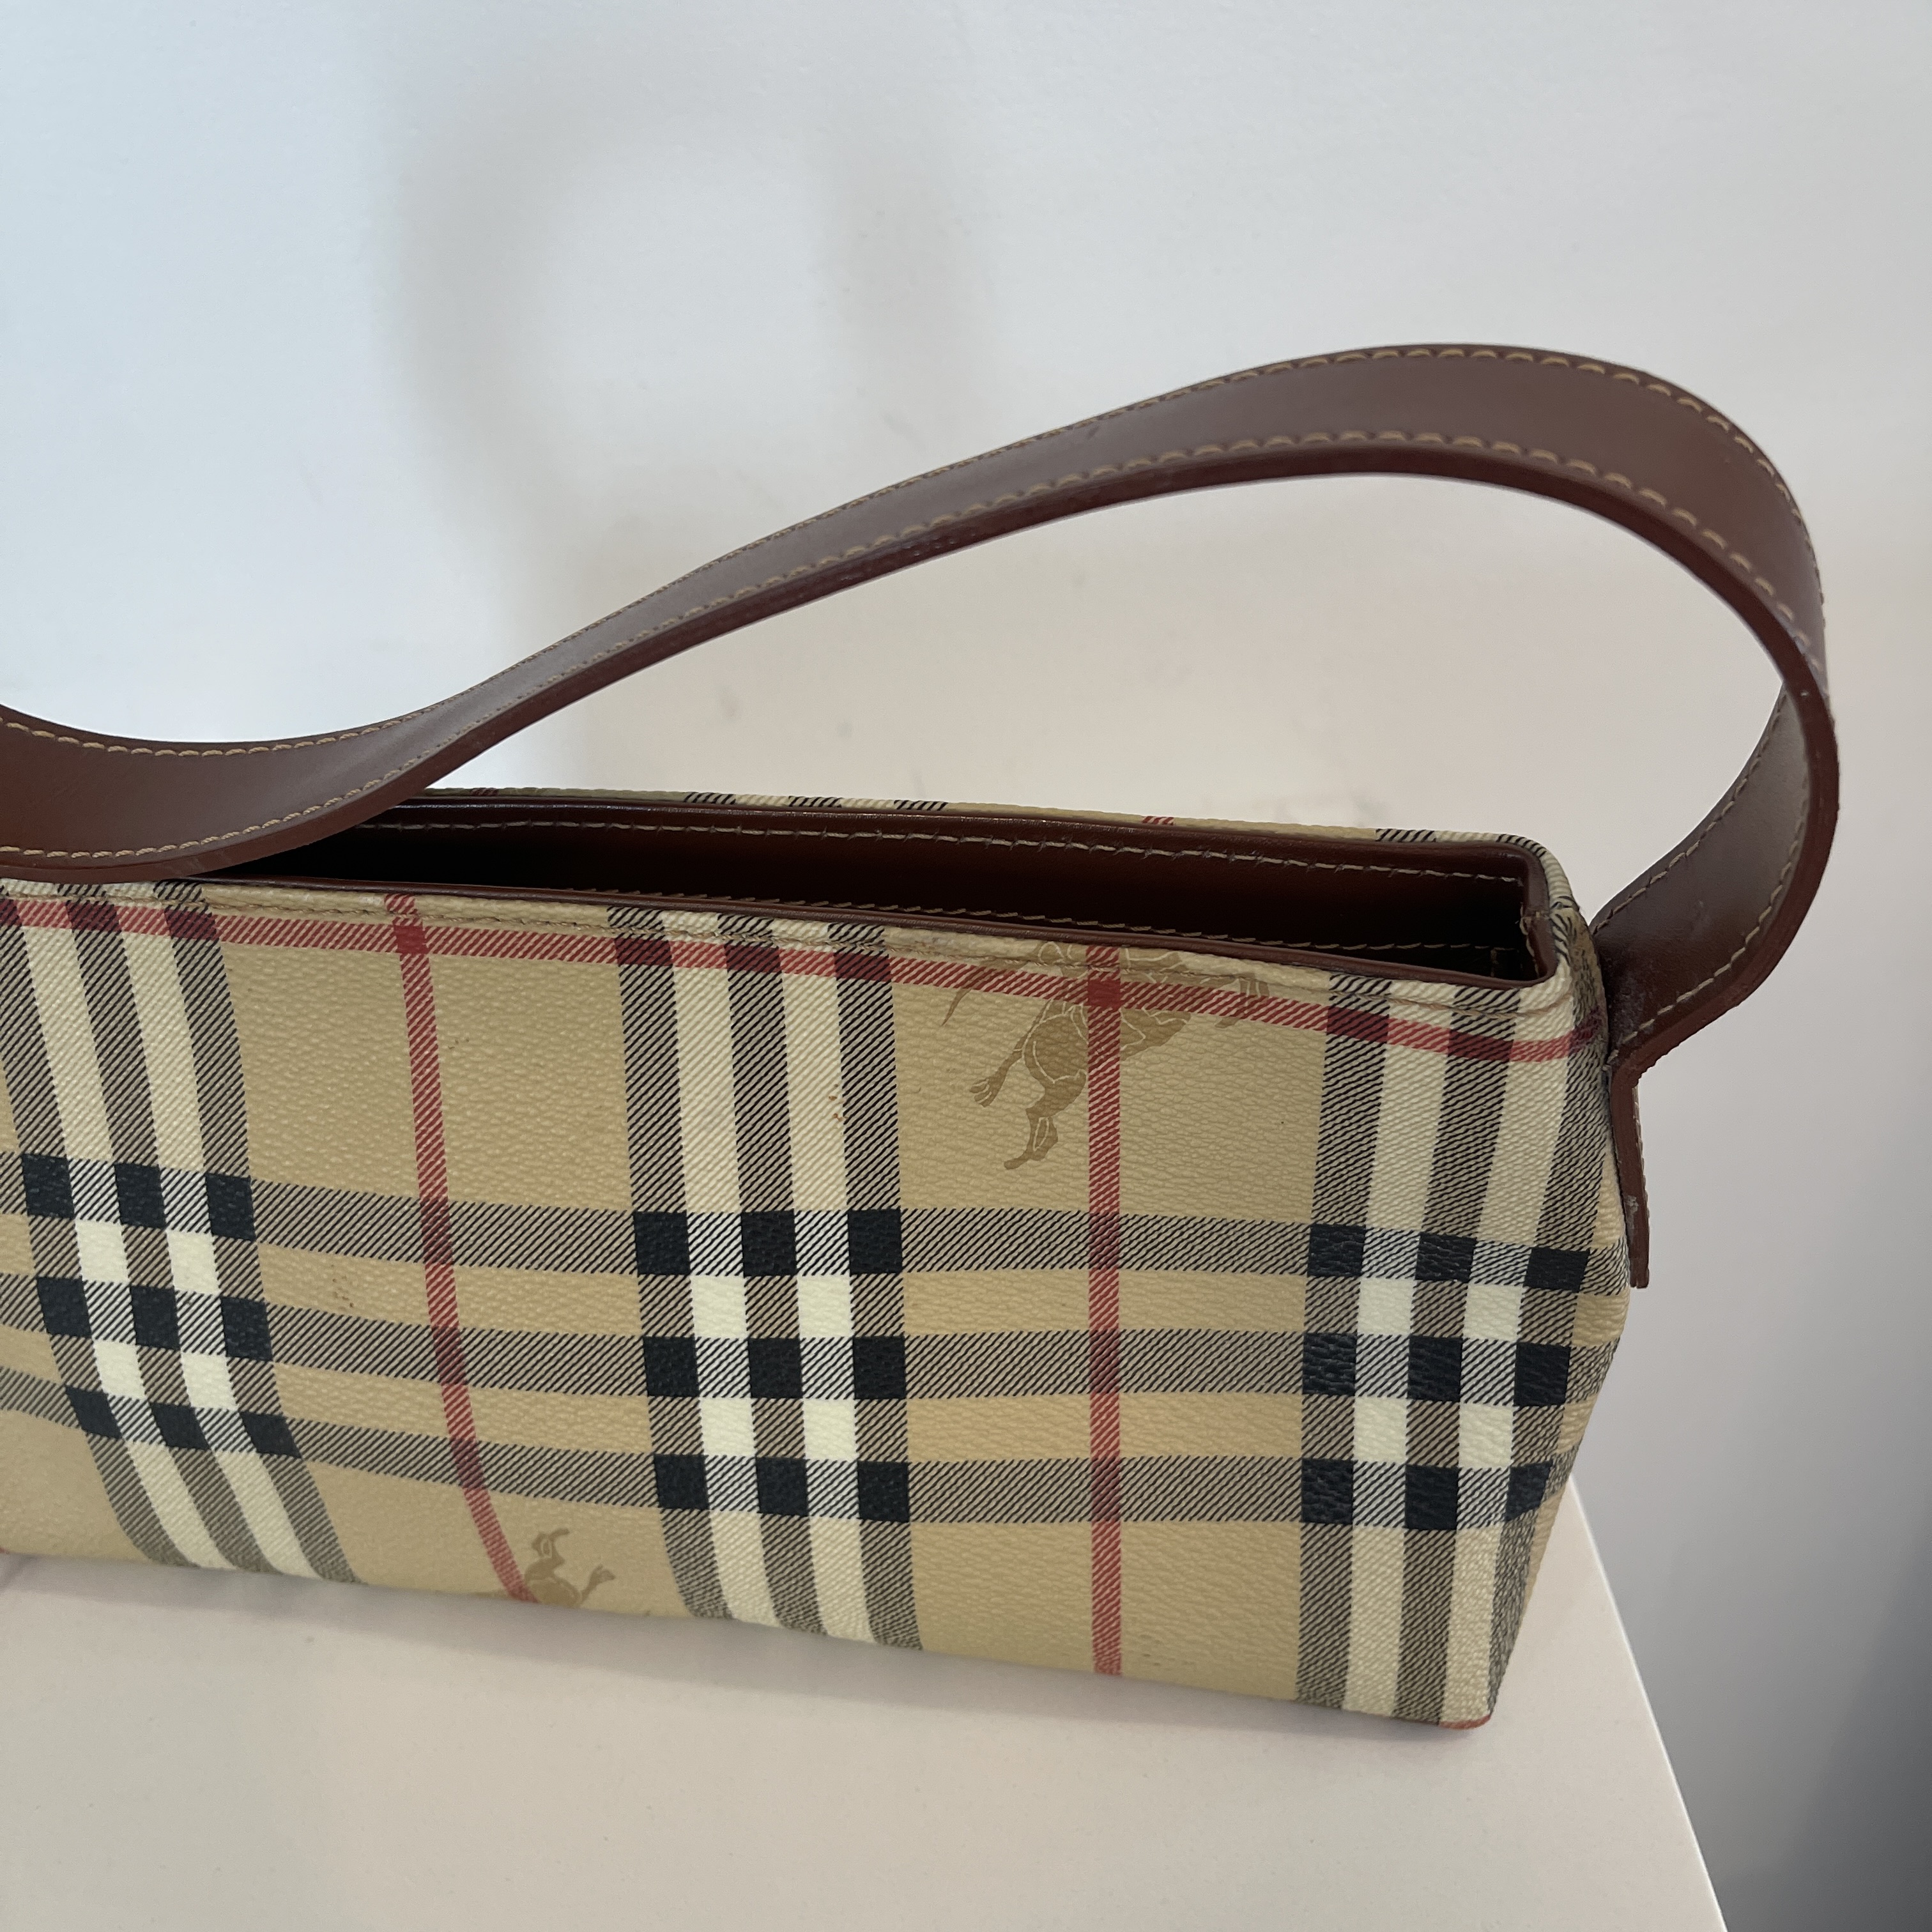 Burberry Vintage Alma Satchel Bag - $285 - From Hi